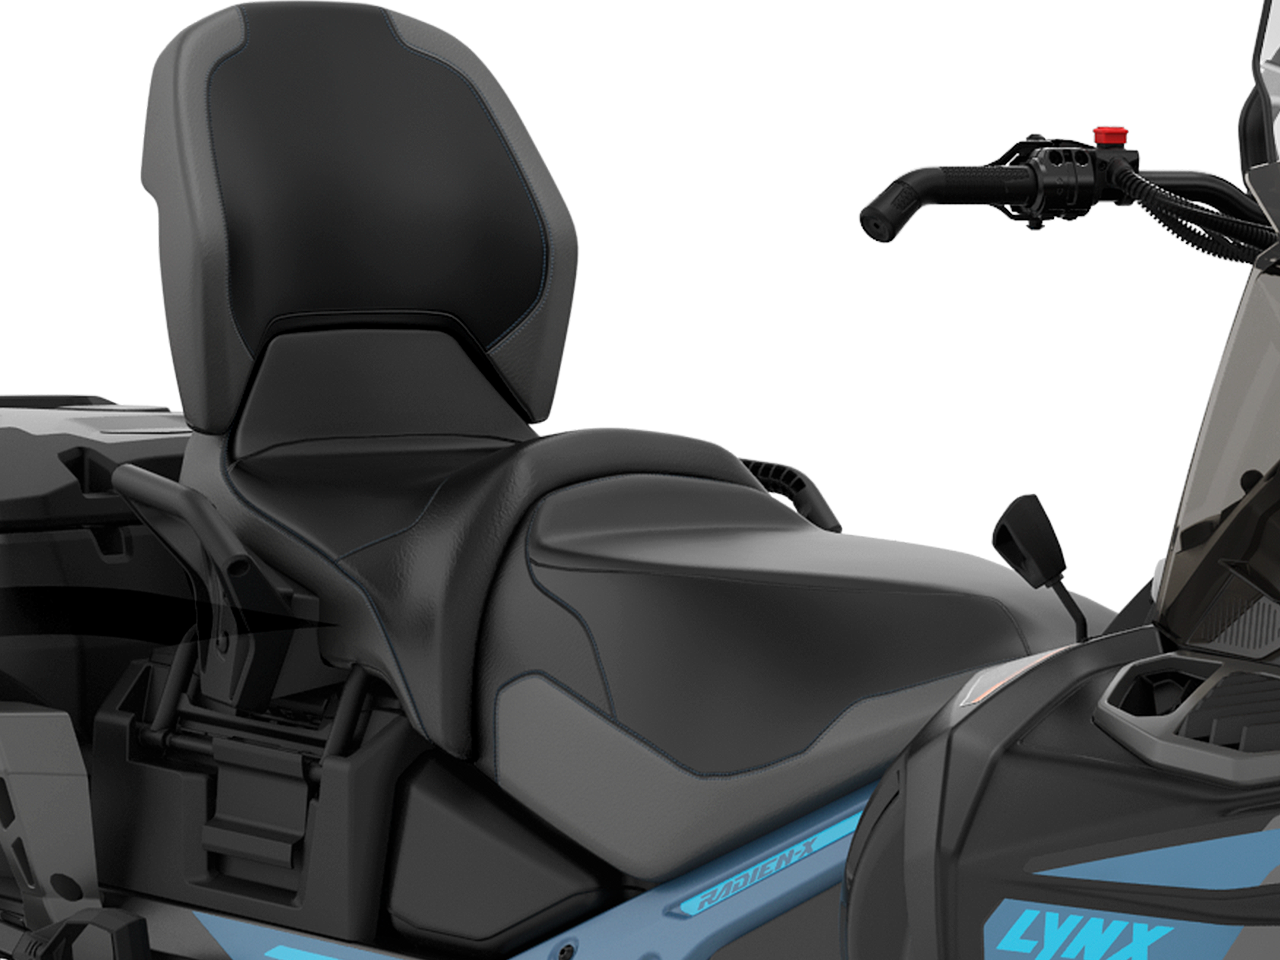 Lynx Commander Modular seat